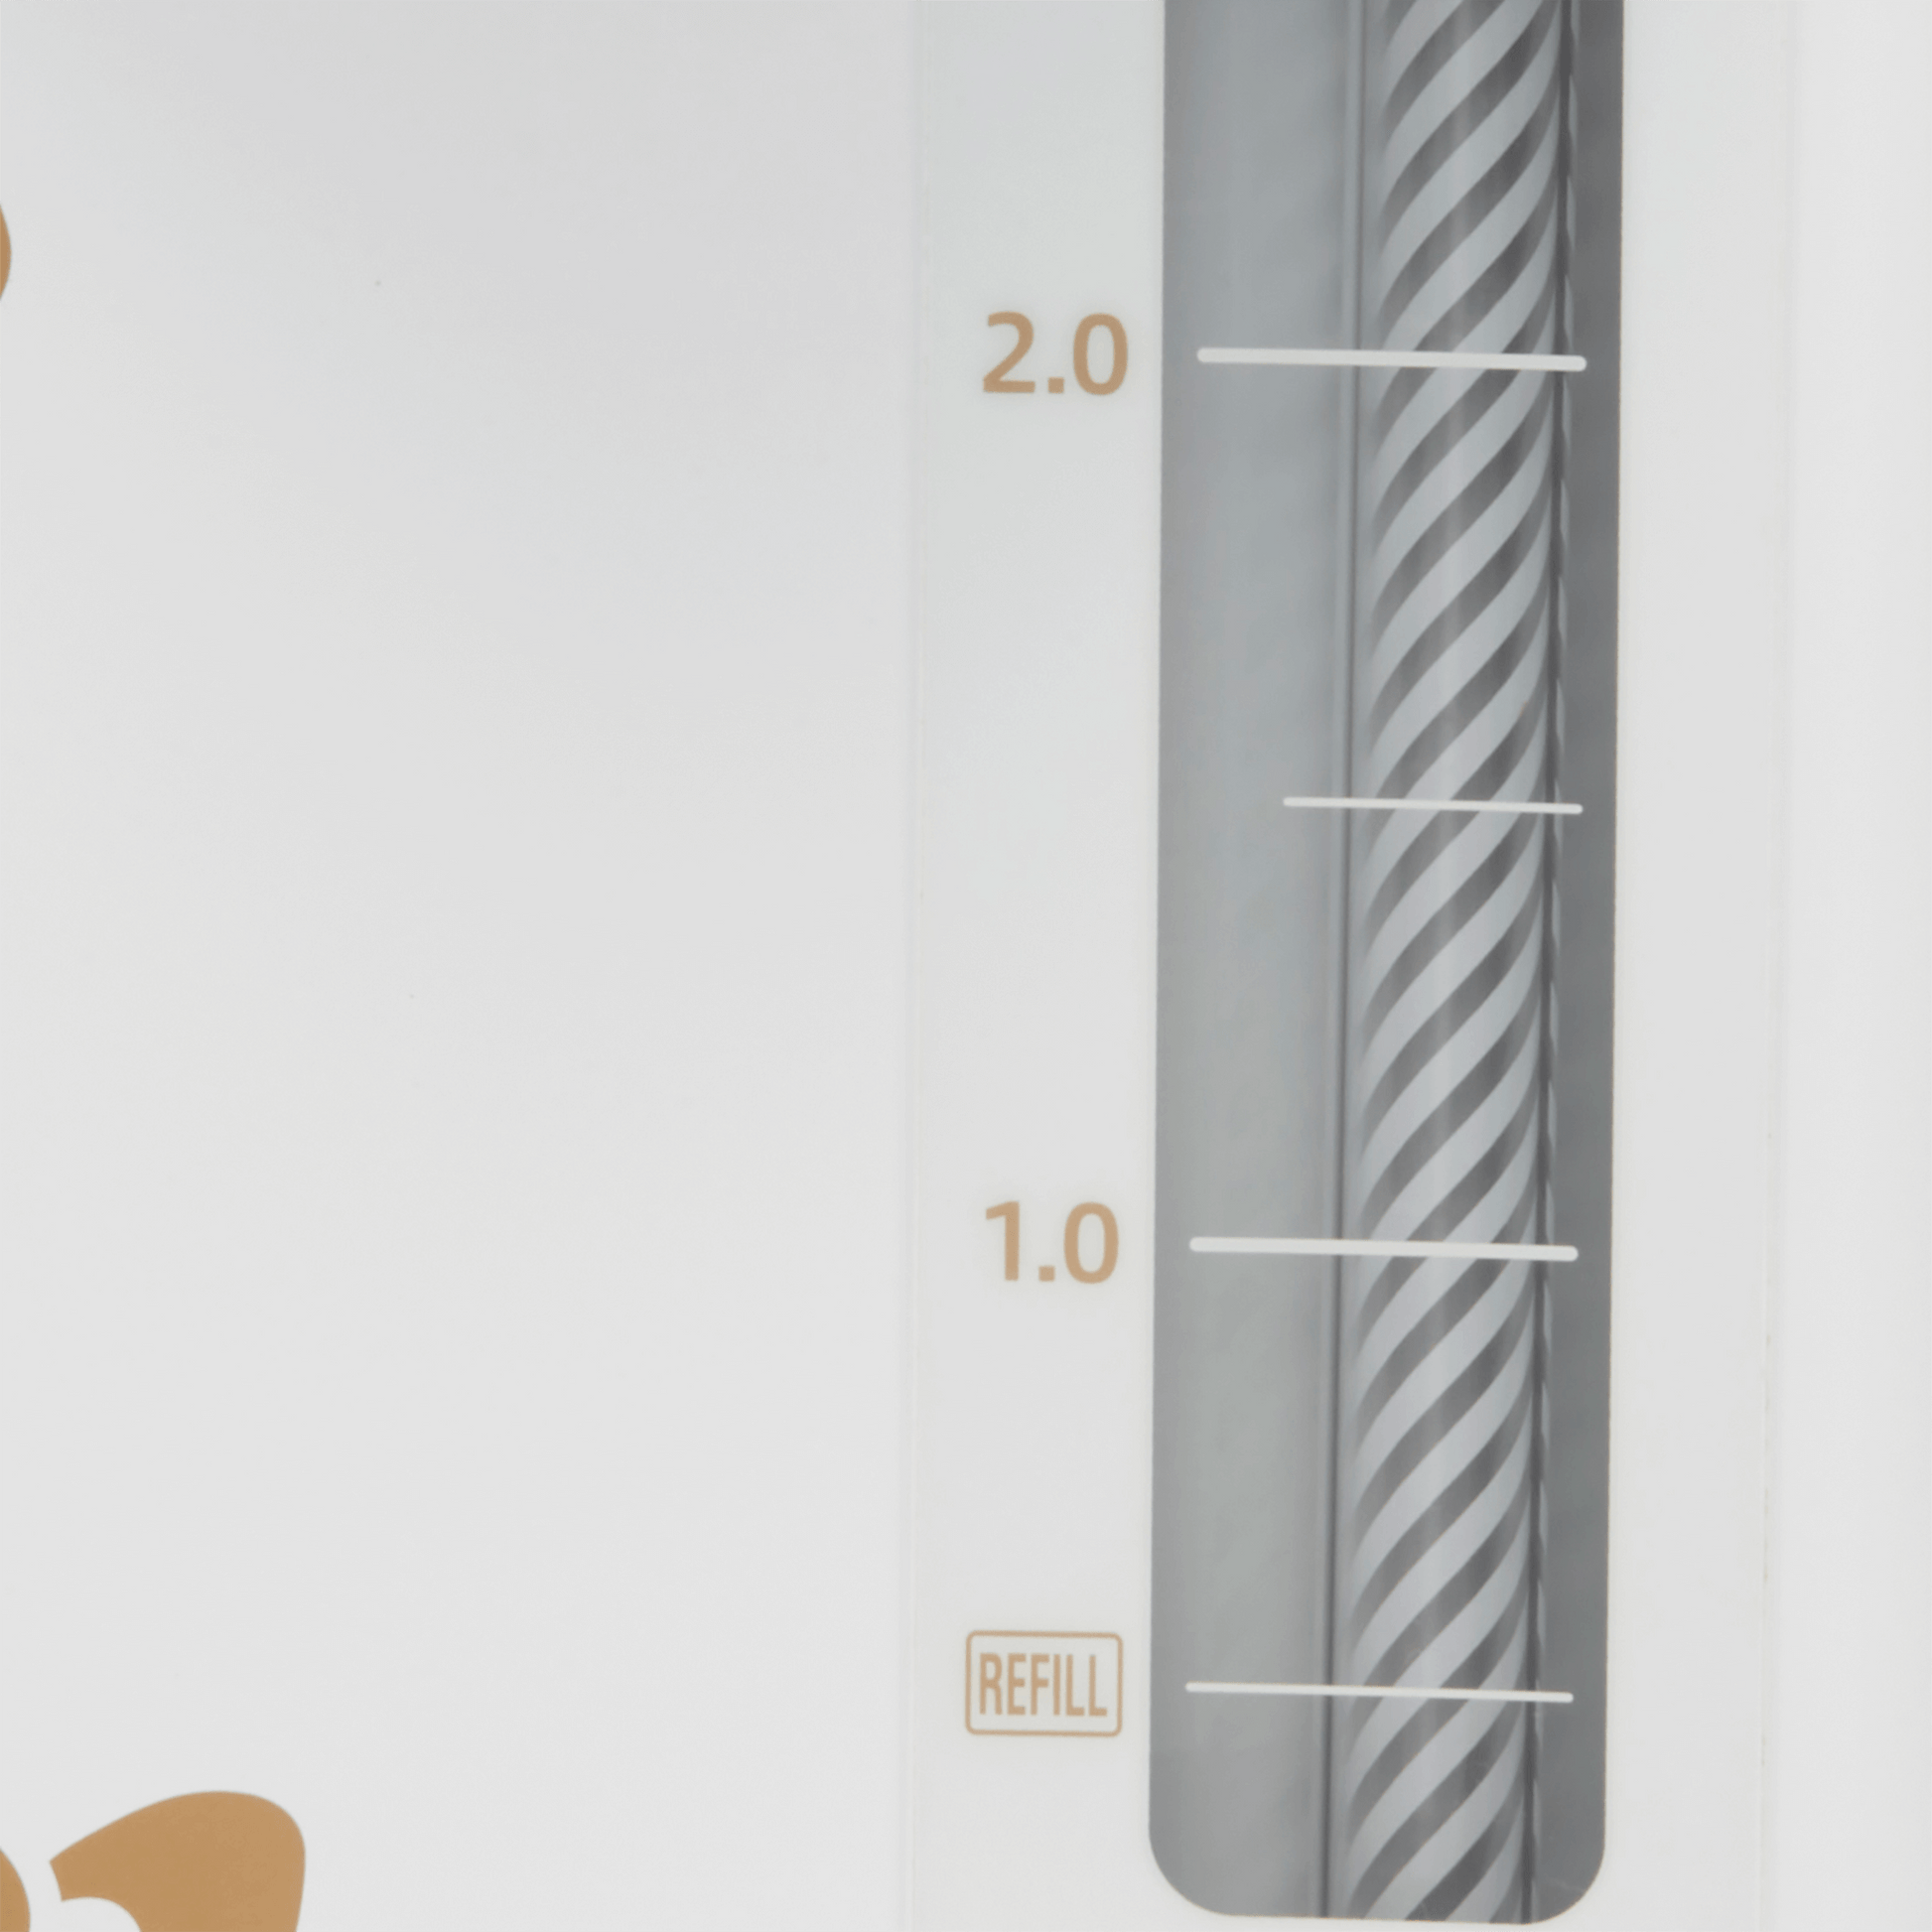 Easy-to-read wide window water level gauge